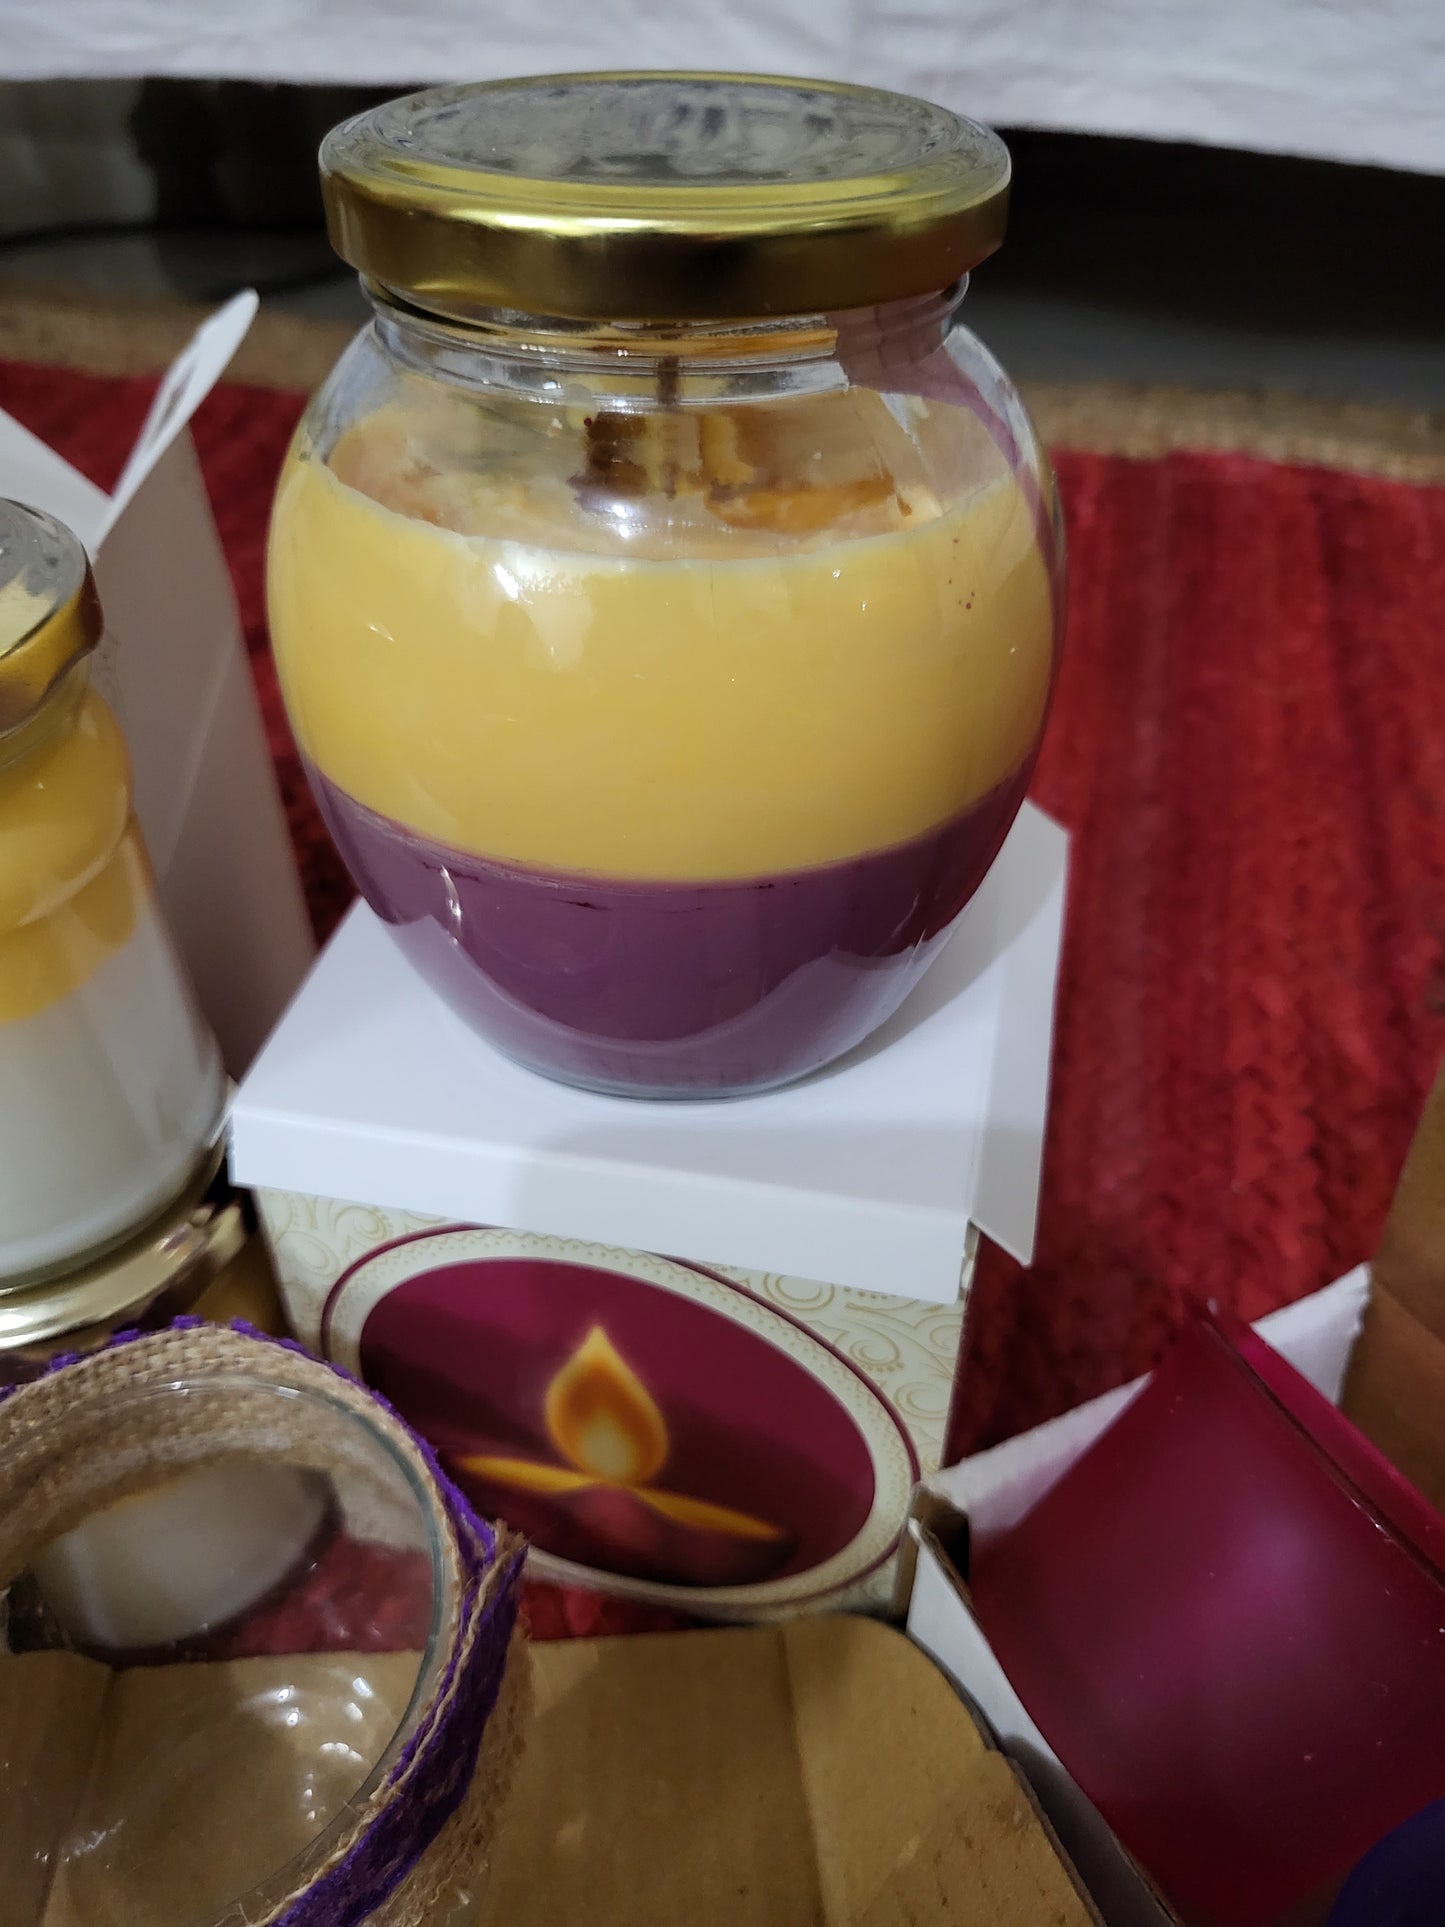 Diwali aromatic jar candle gift set